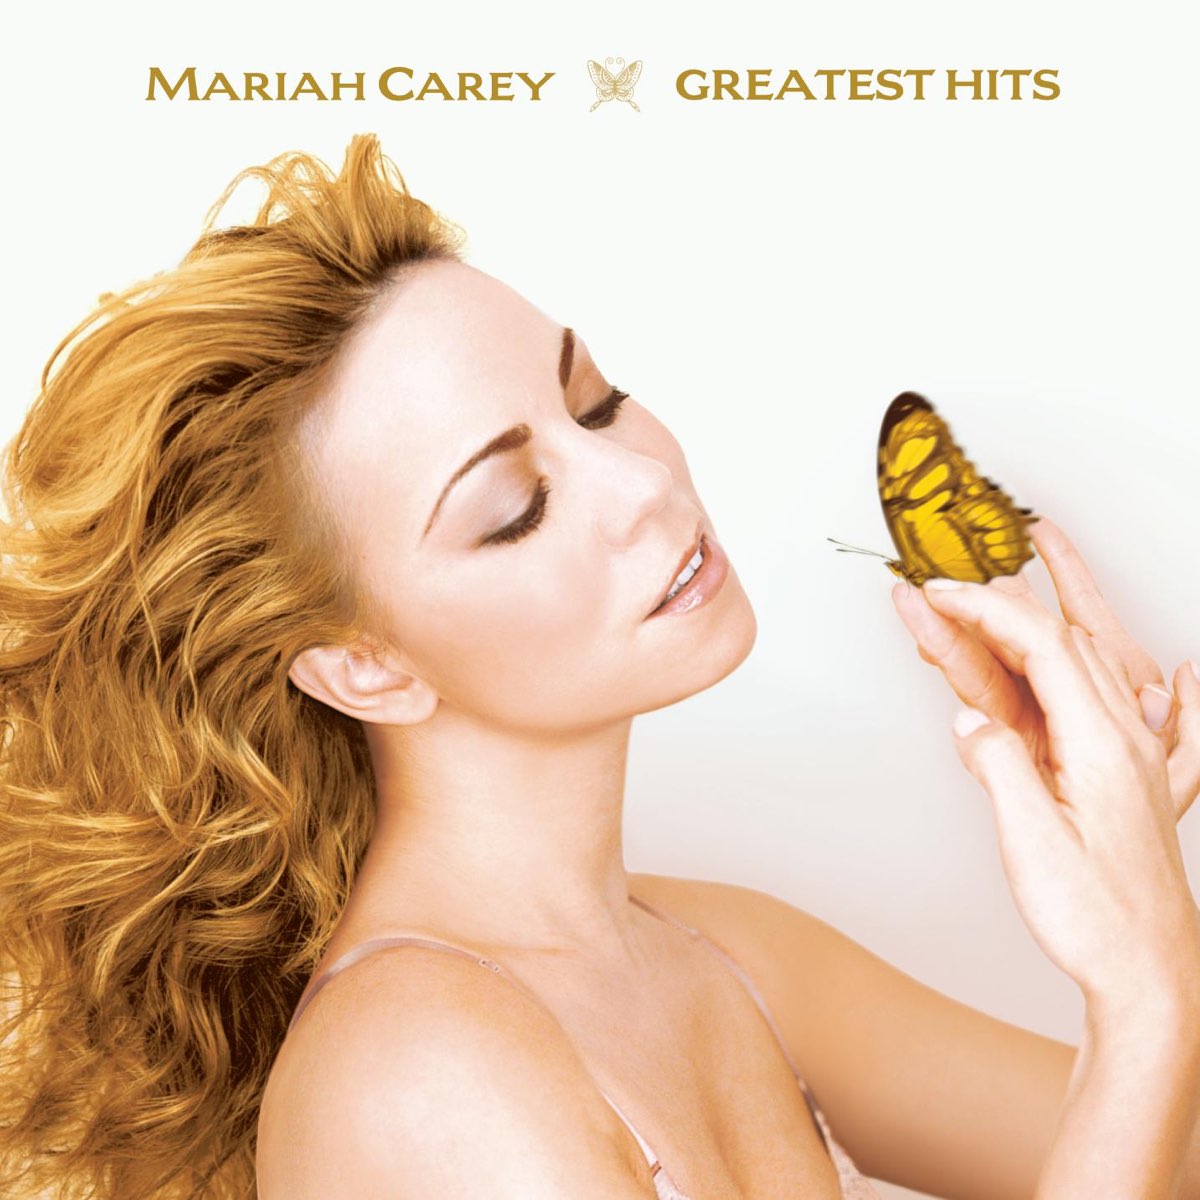 Greatest Hits - Album by Mariah Carey - Apple Music